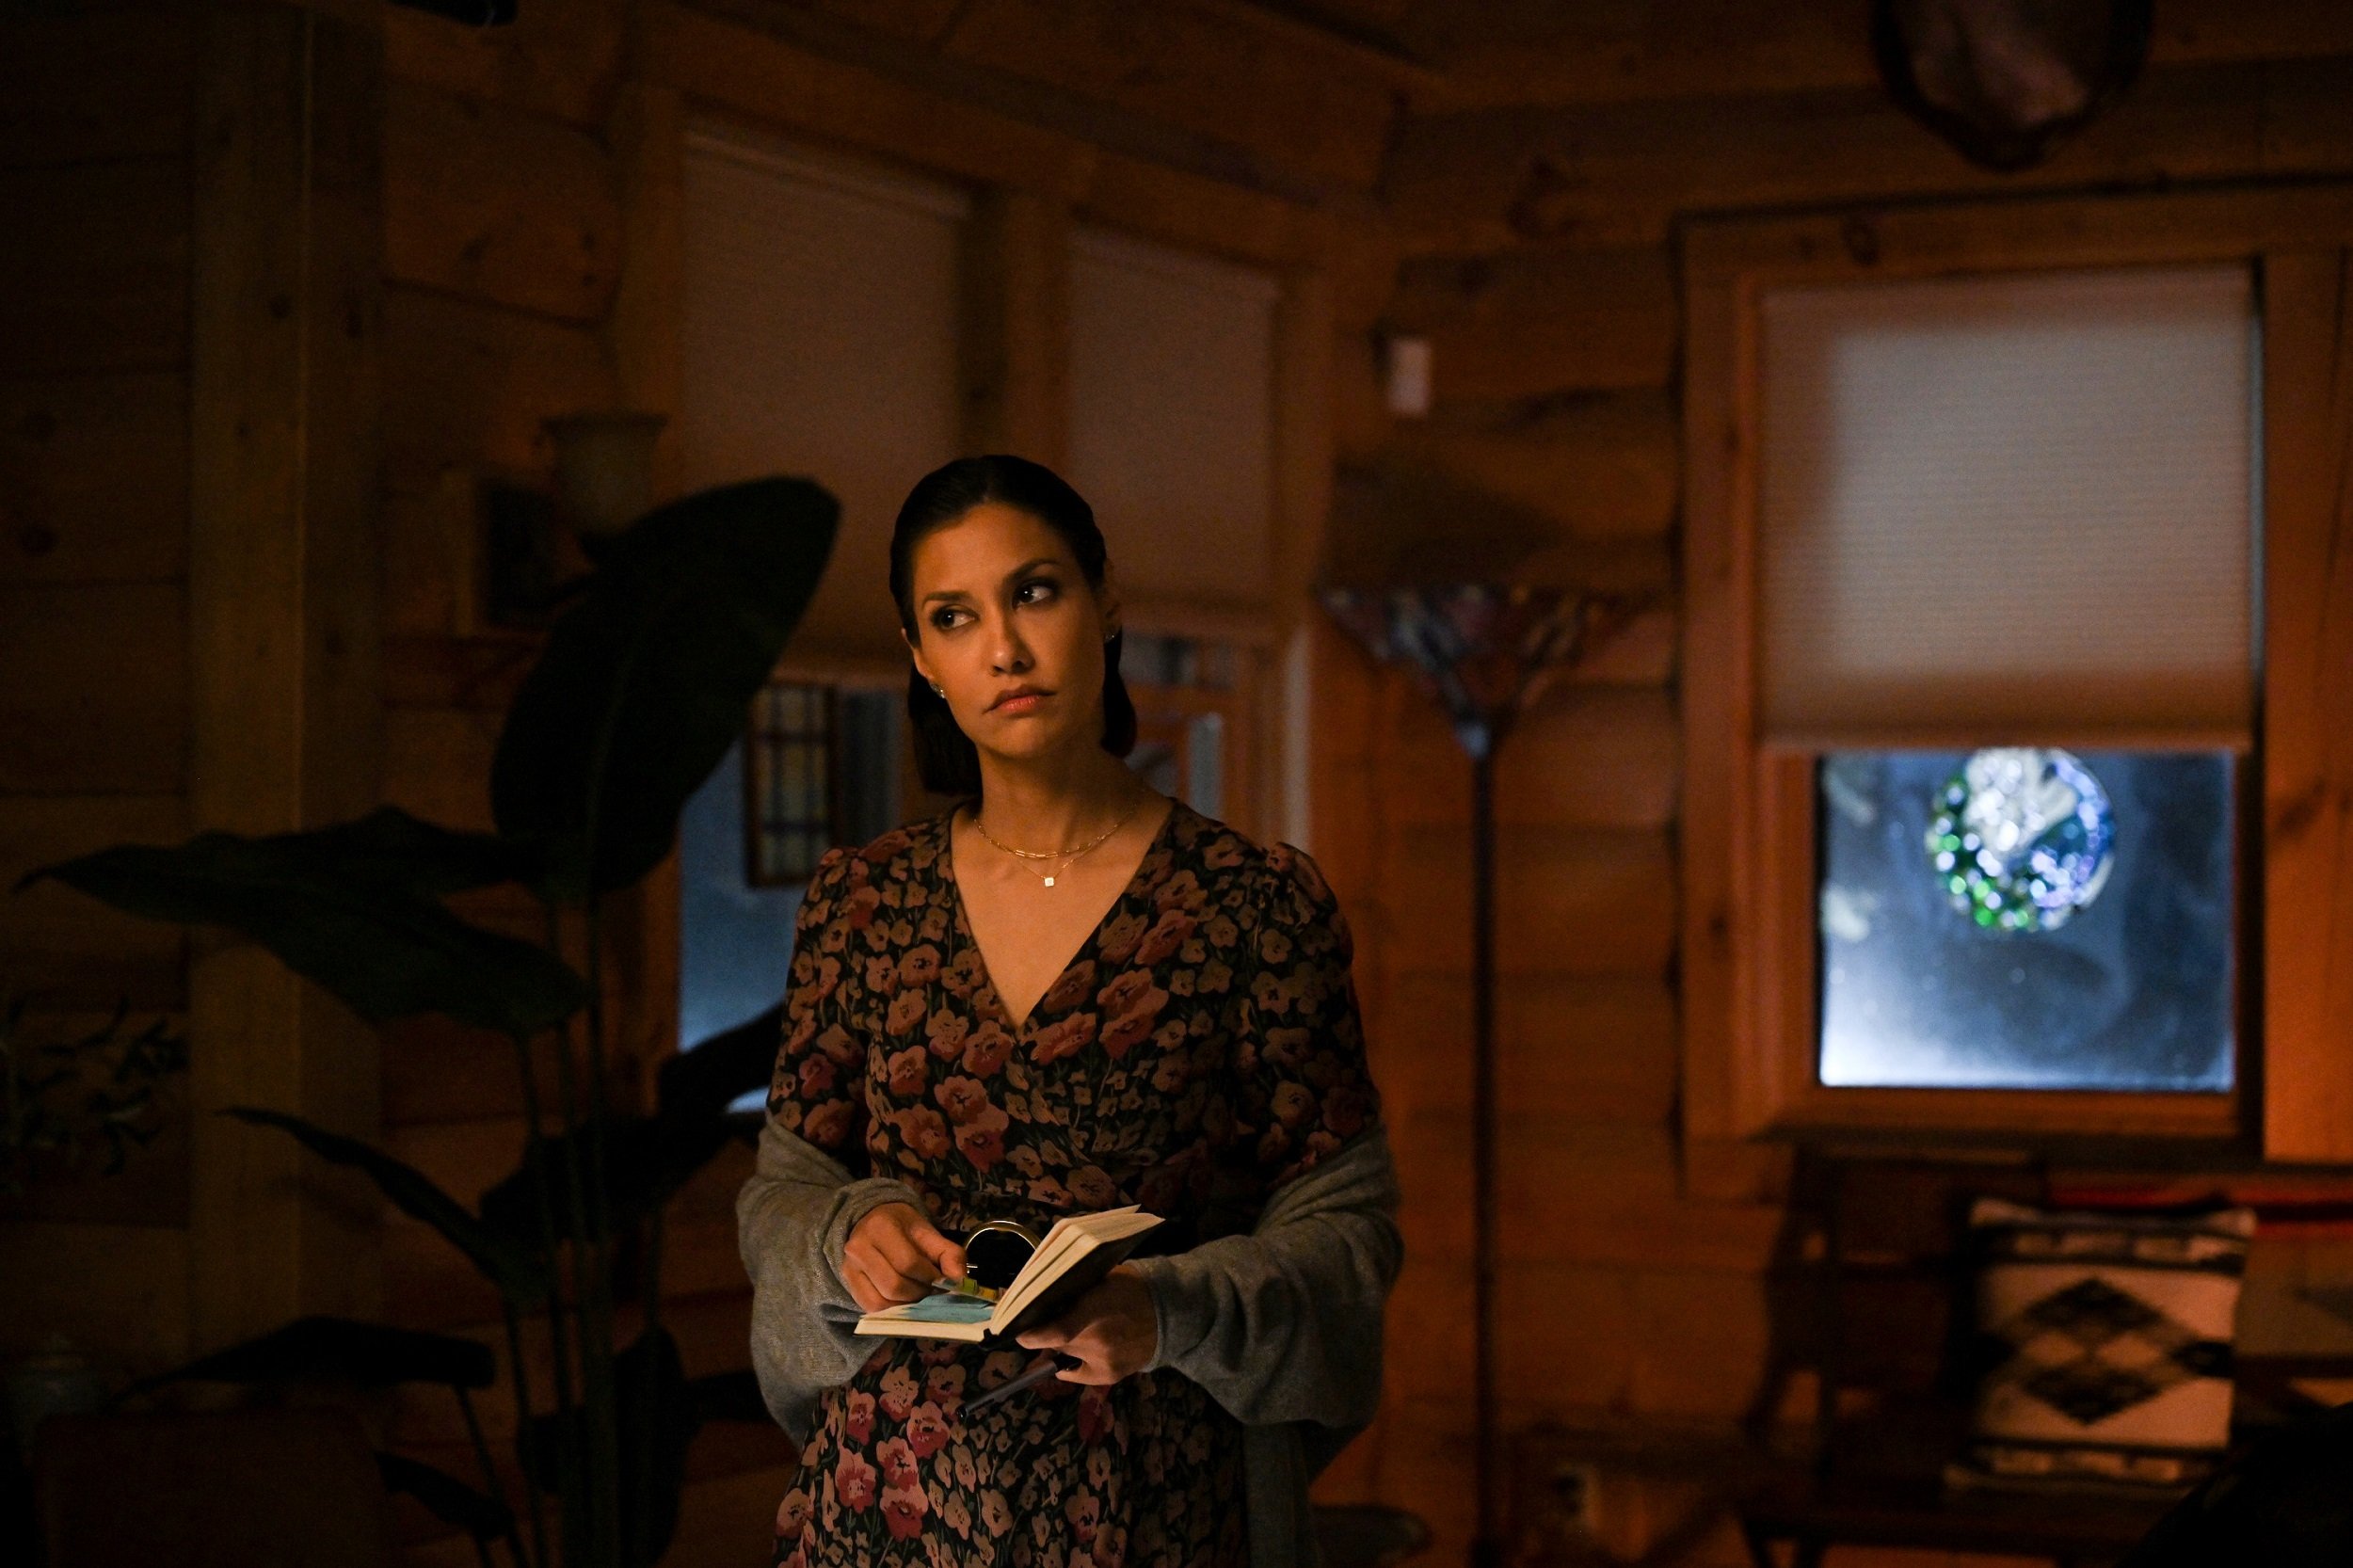 'Big Sky' Season 2: Janina Gavankar looks puzzled with a book in her hand as Ren Bhullar